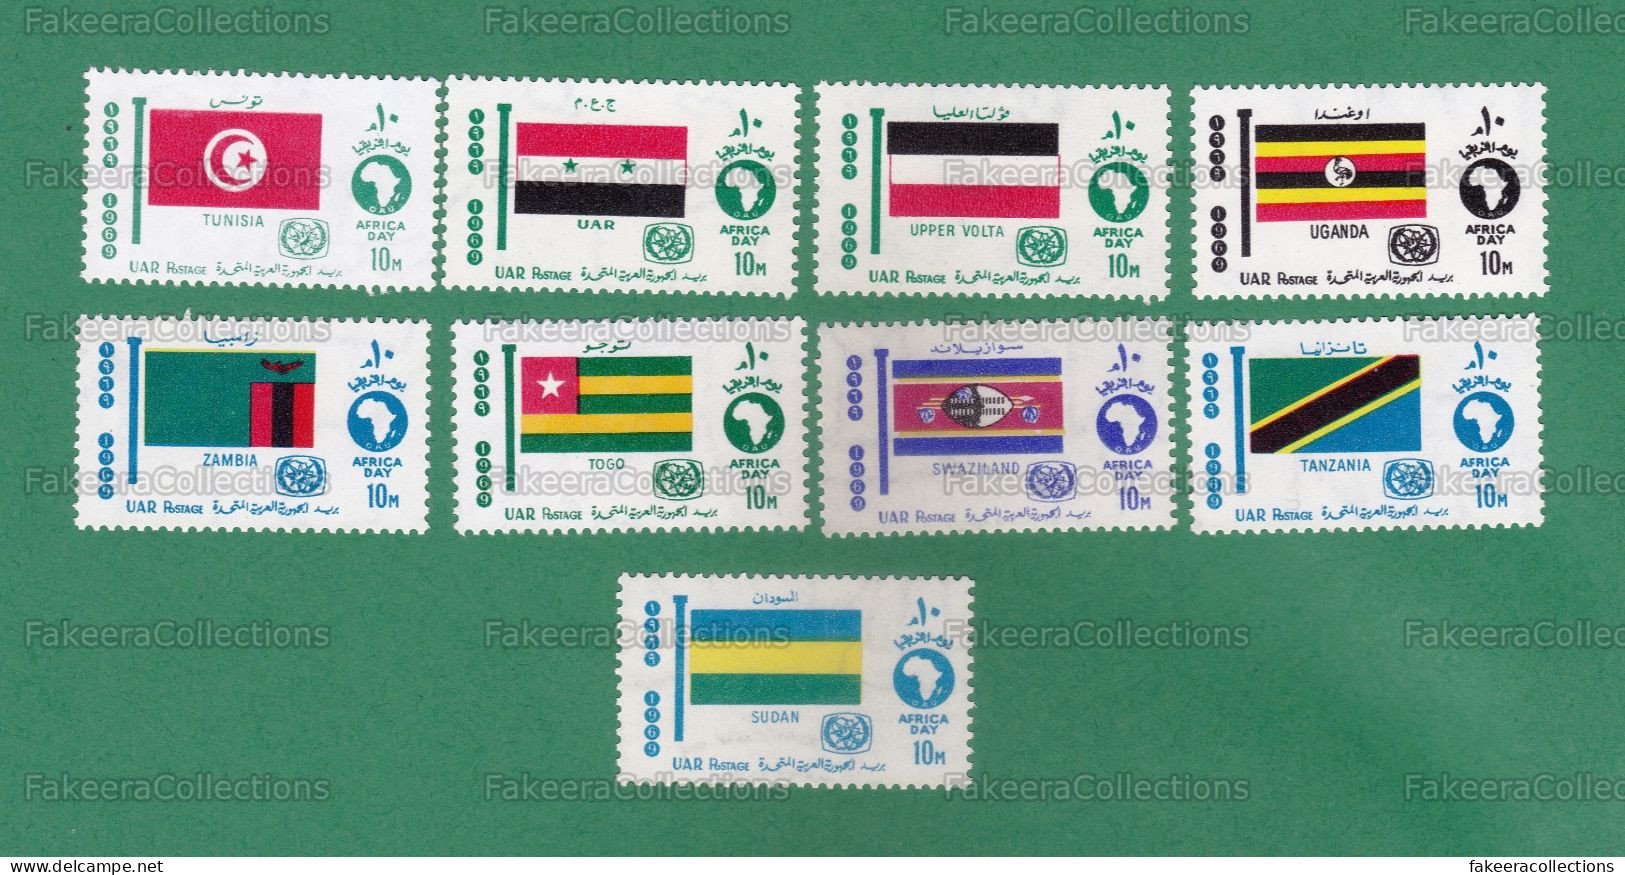 UNITED ARAB REPUBLIC (EGYPT) UAR 1969 - AFRICA DAY 41v MNH ** Set - NATIONAL FLAGS, Tourist Year, Flag, Emblem - As Scan - Neufs